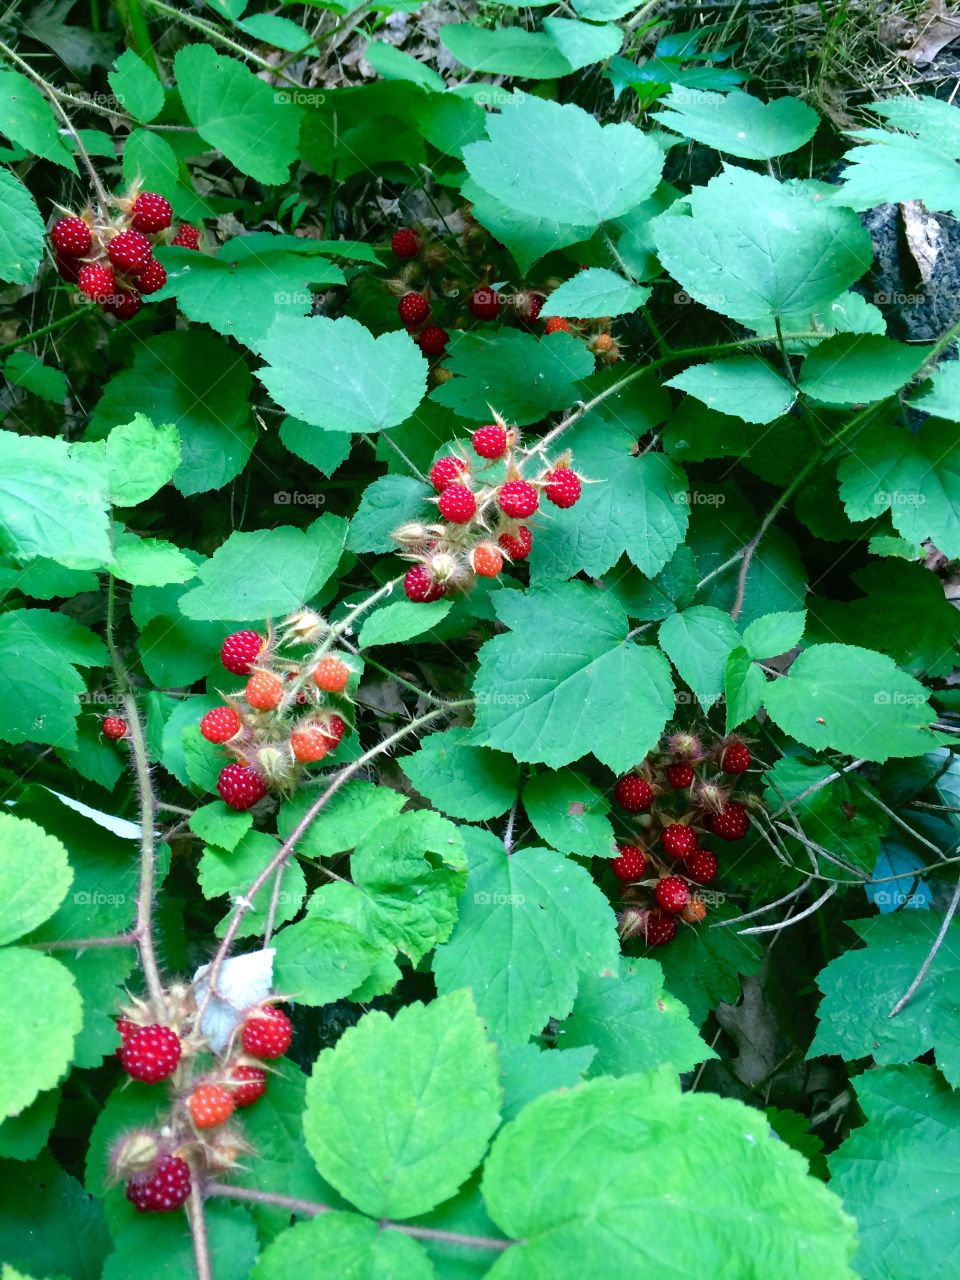 Wild Raspberry Summer. Wild raspberries (wineberries) grow in high summer in the Hudson River Valley